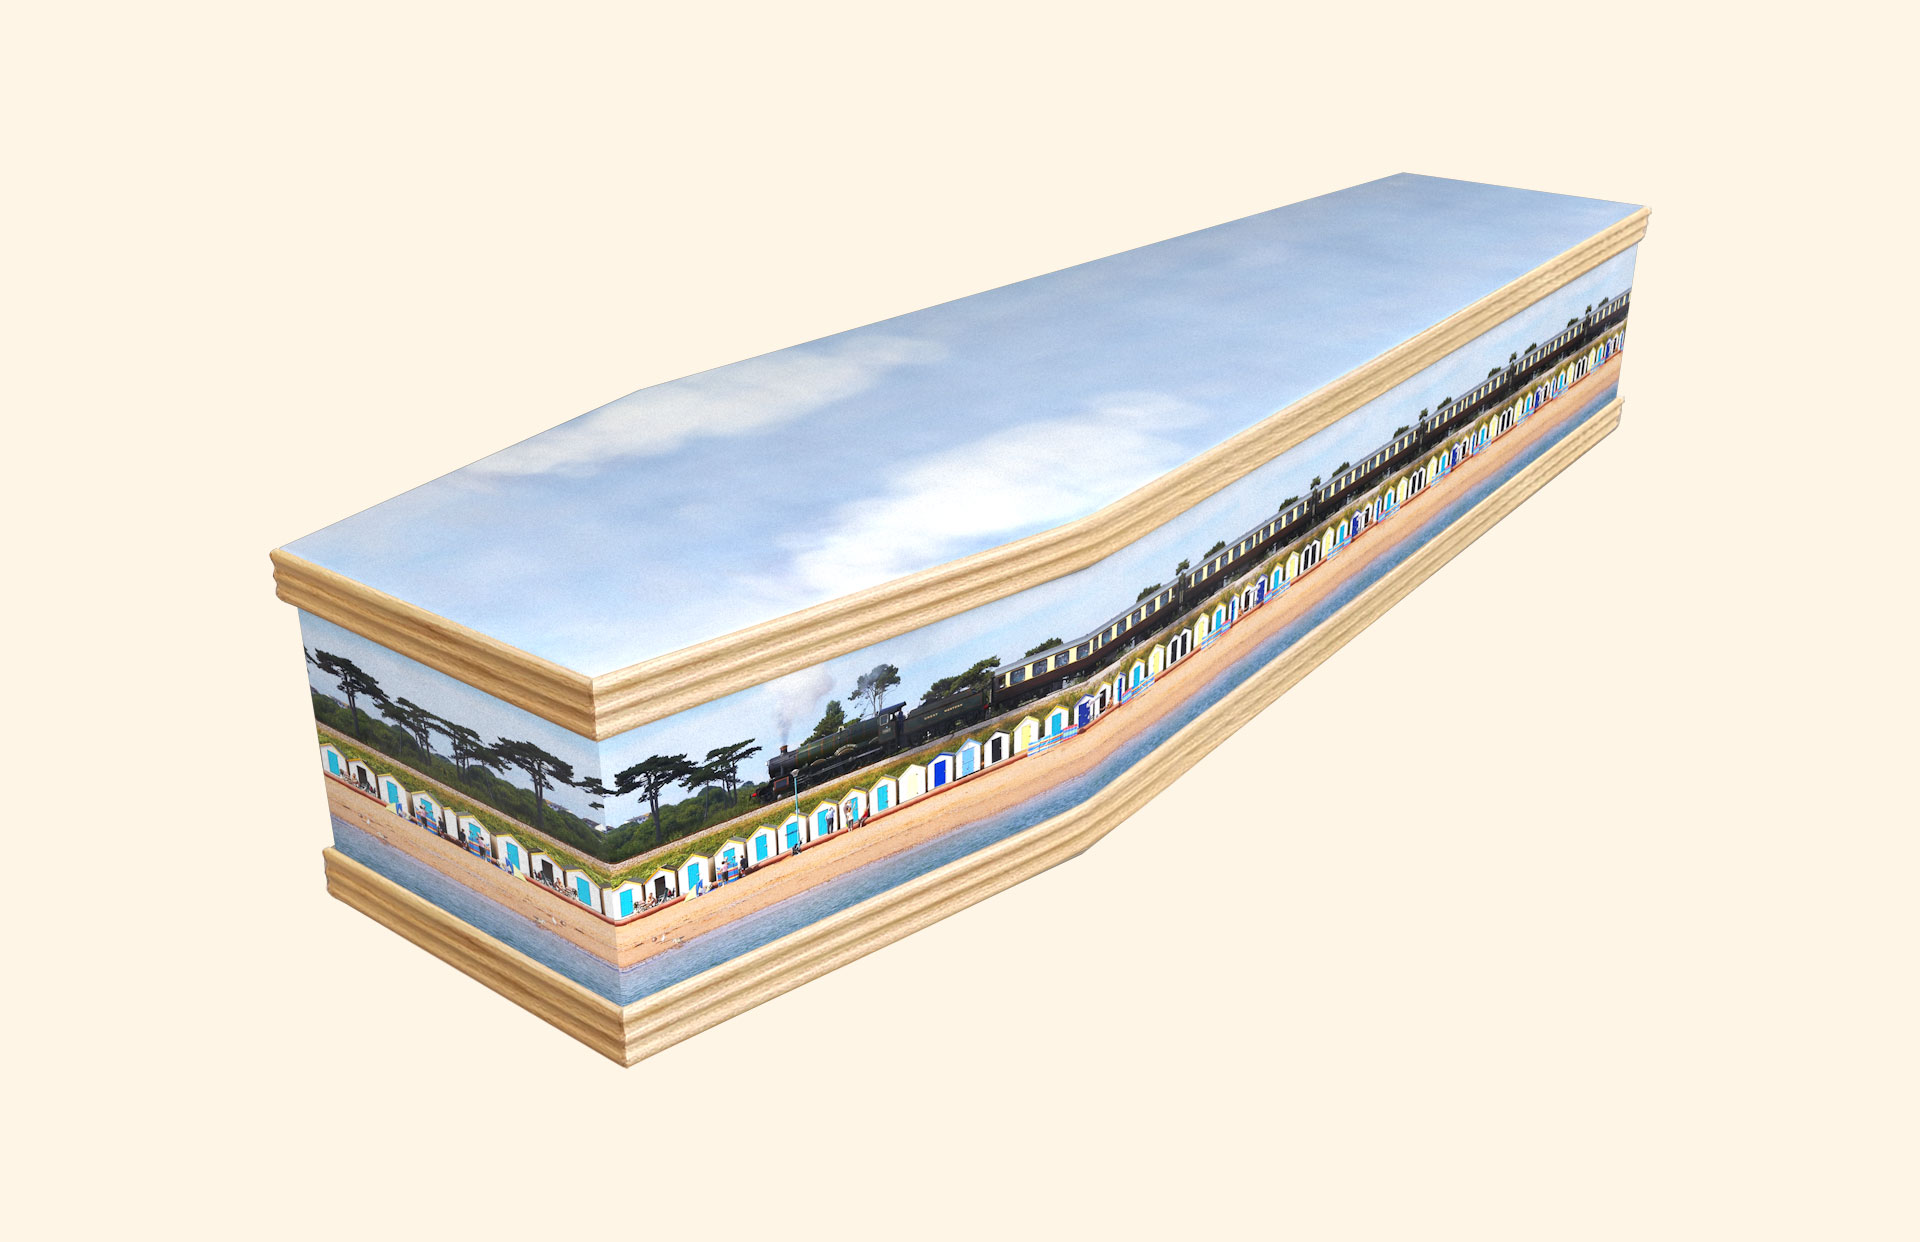 Seaside Train design on a classic coffin